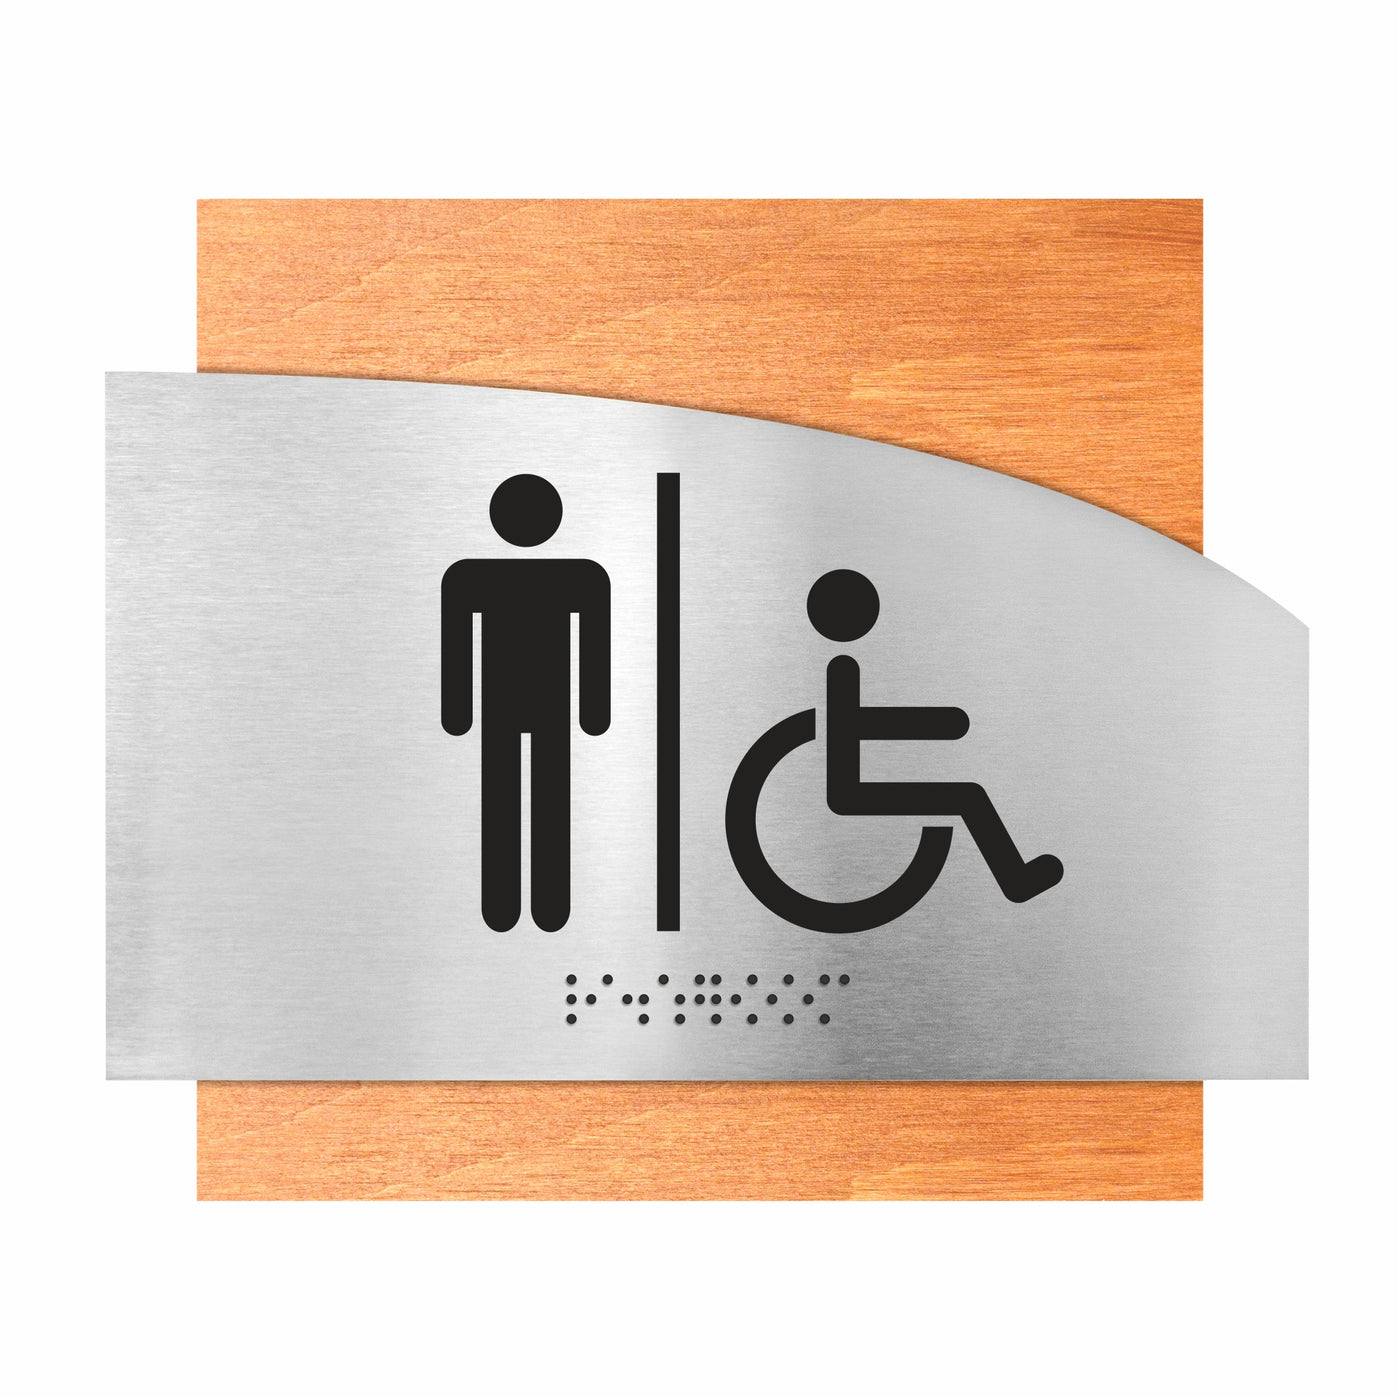 Men & Wheelchair Bathroom Sign - "Wave" Design